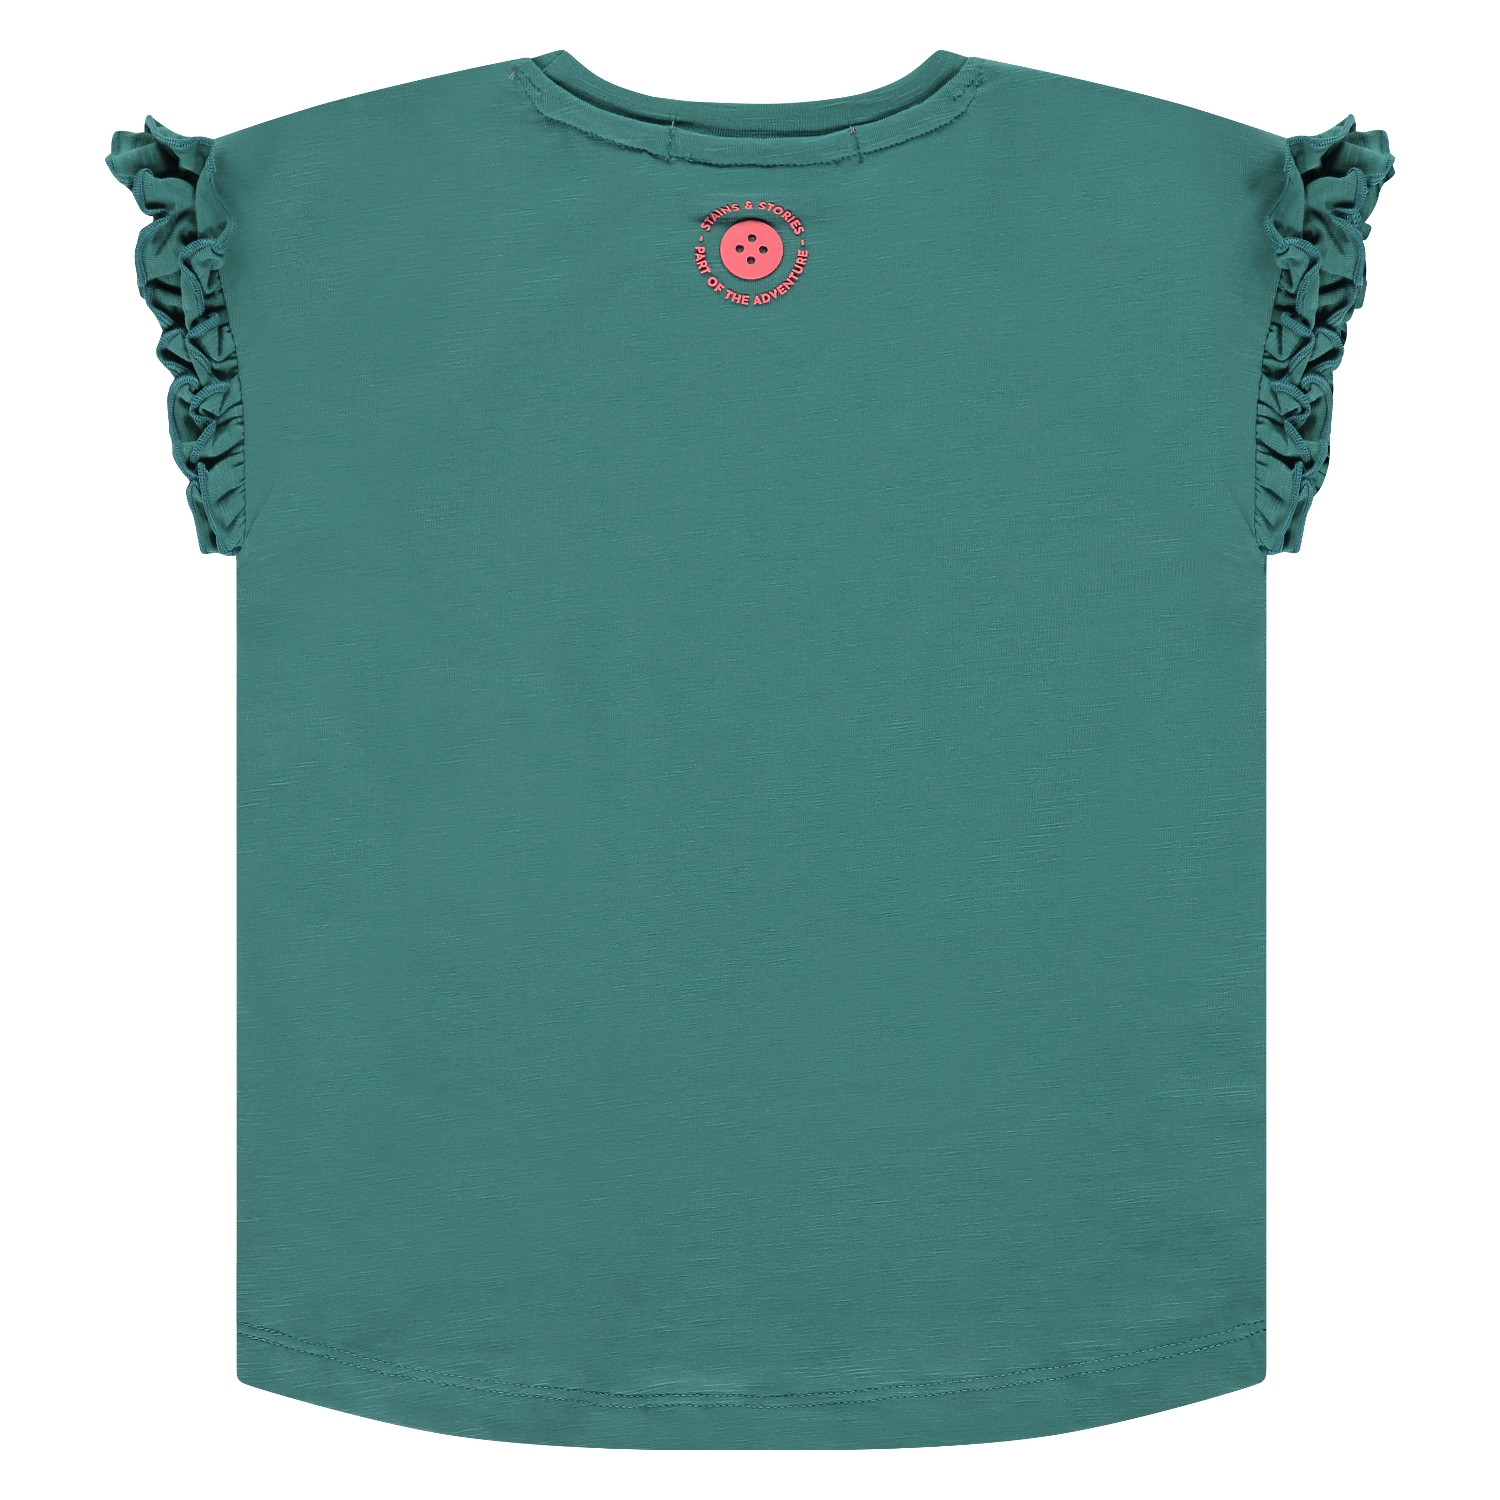 Babyface Girl Shirt emerald